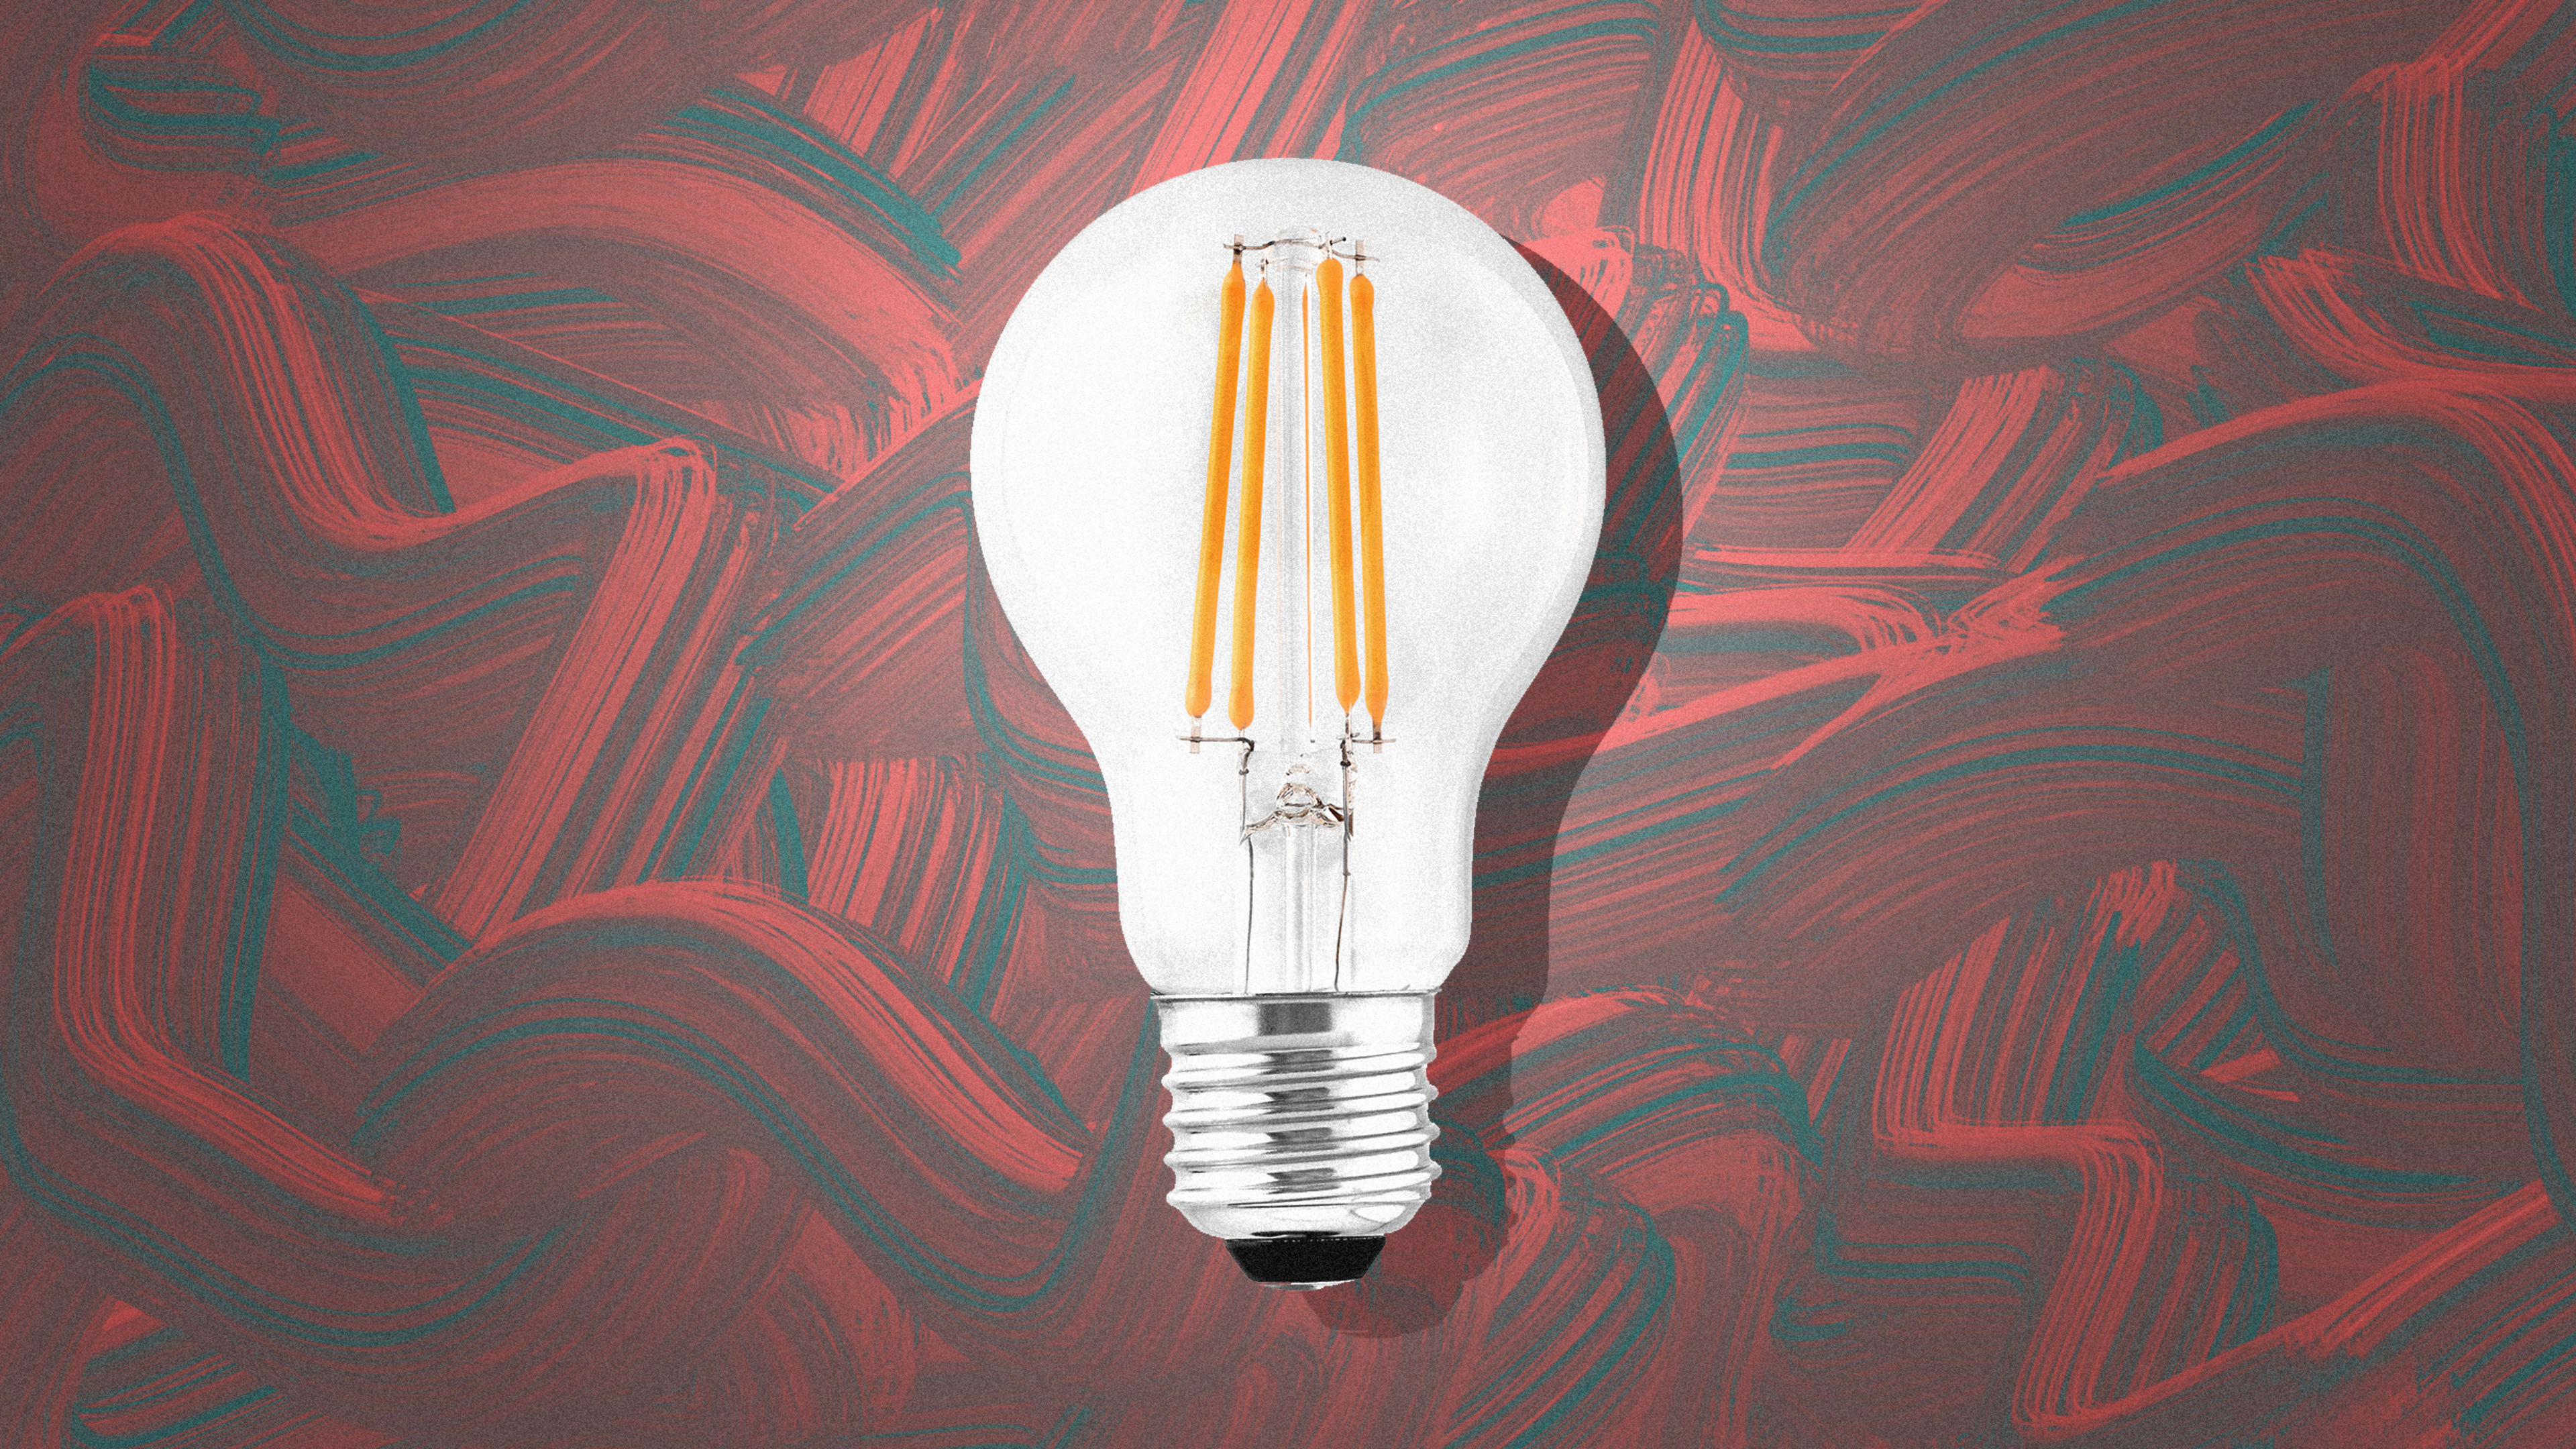 Ikea, Amazon, and the billion-dollar war over light bulb design